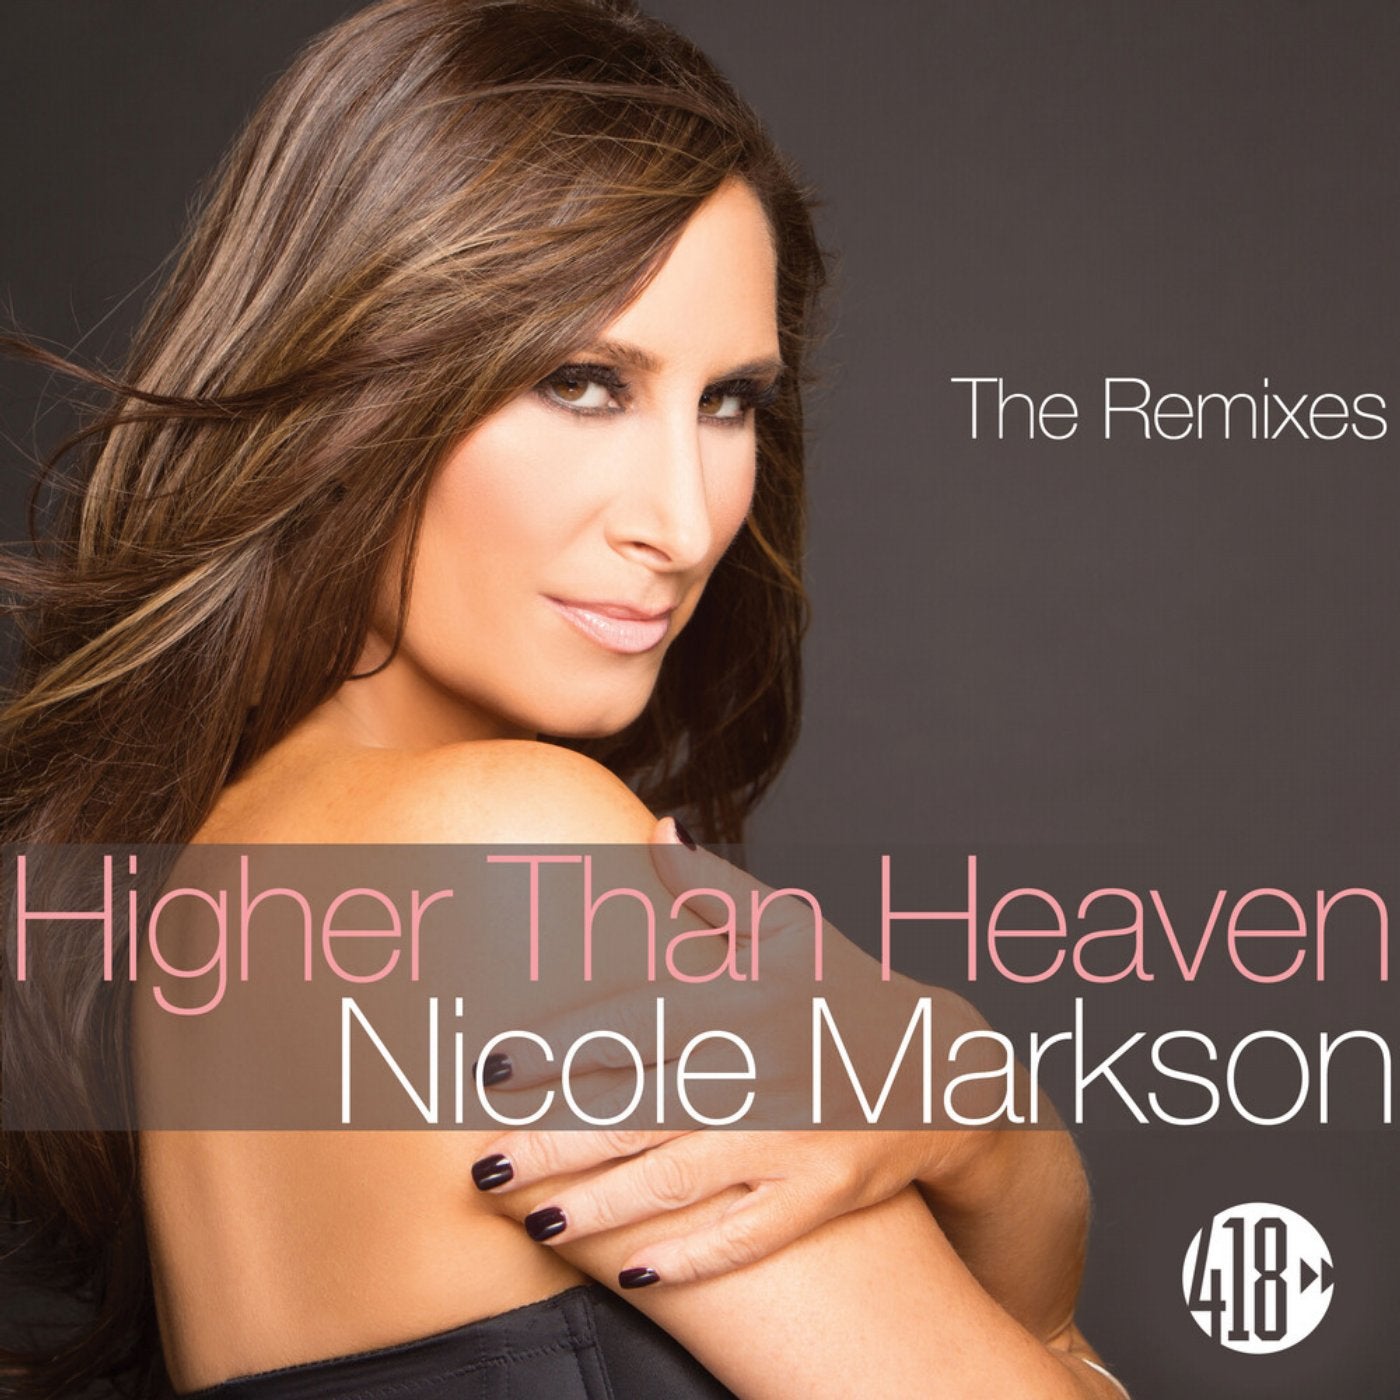 Higher Than Heaven (The Remixes)